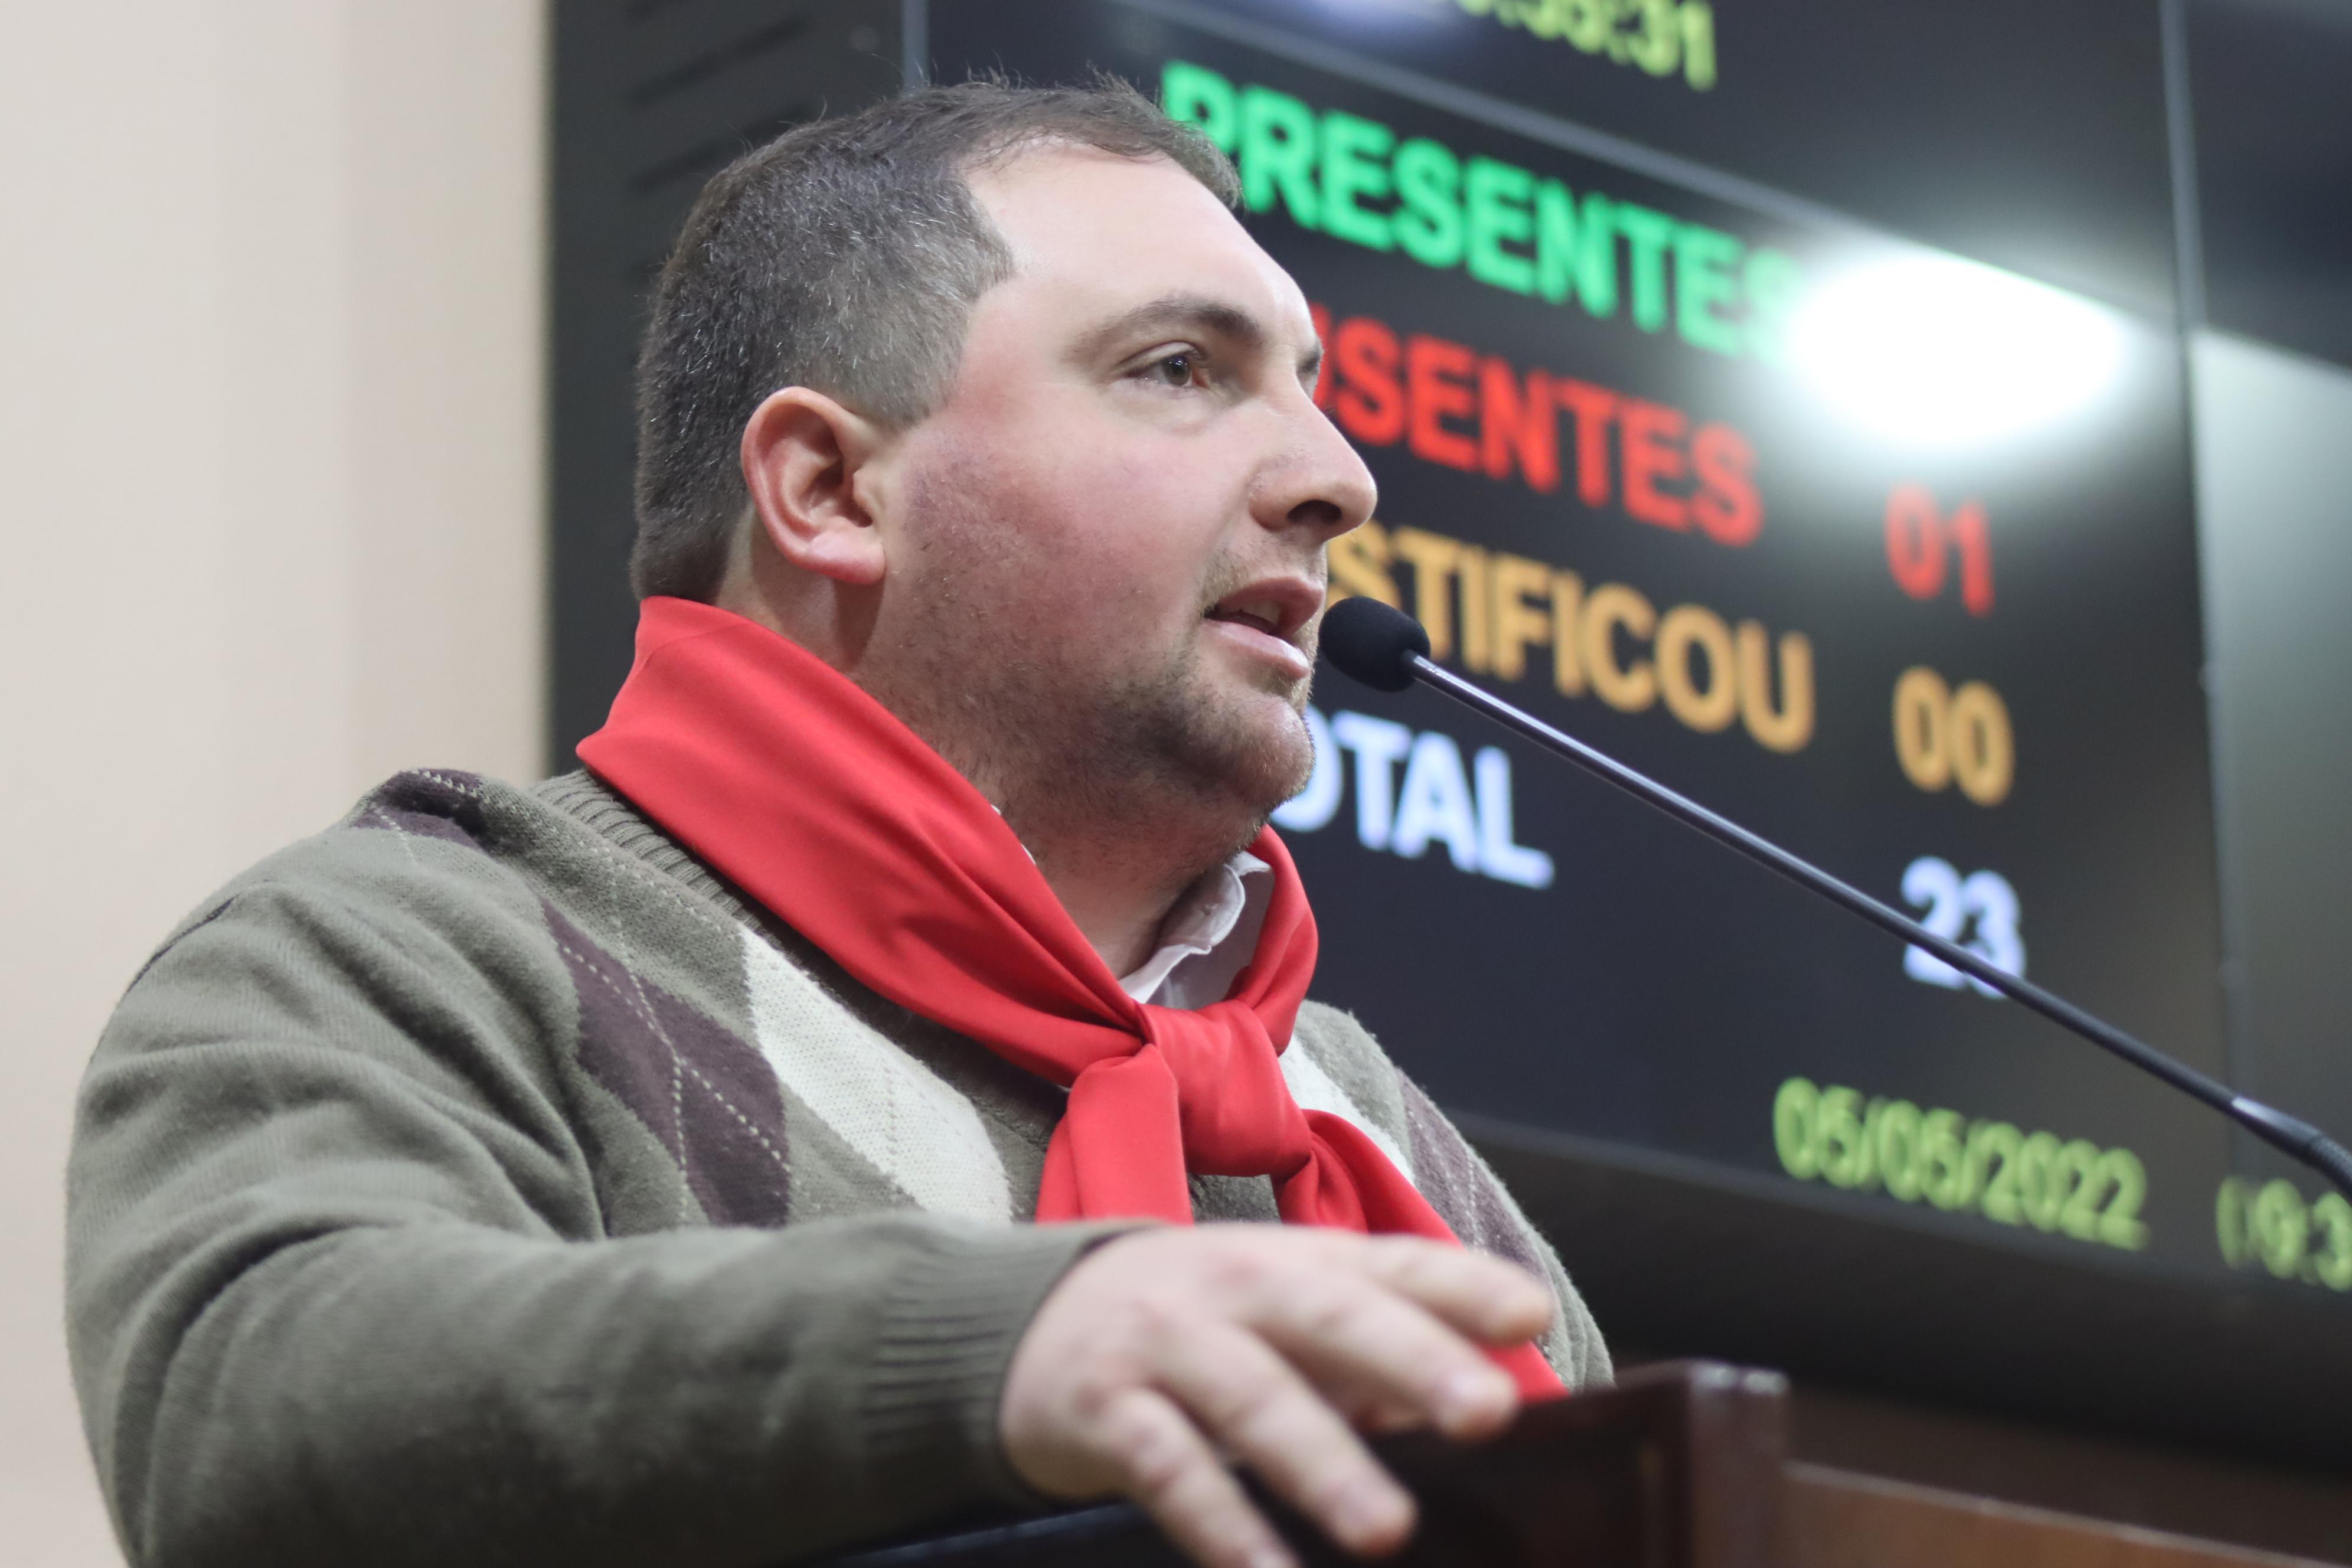 Daneluz critica proposta que quer fim dos rodeios no Estado gaúcho